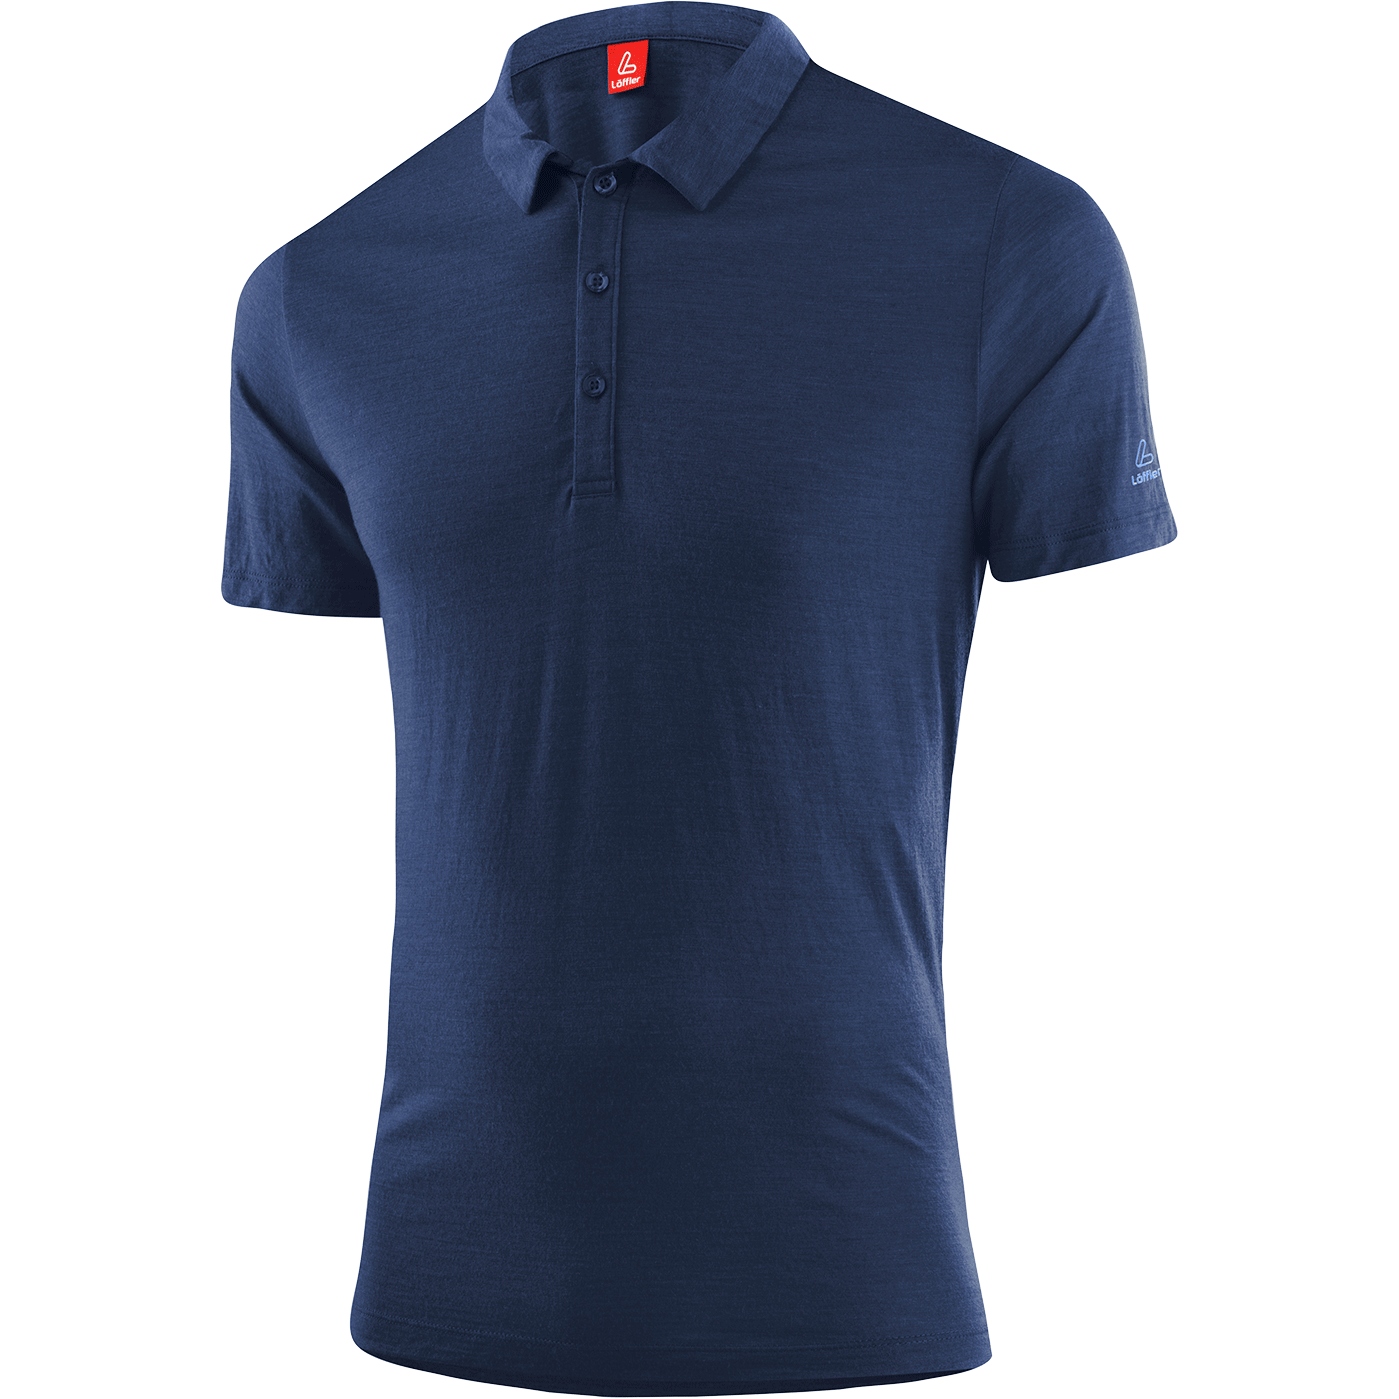 Produktbild von Löffler Merino-Tencel™ Poloshirt Herren - dunkelblau 495